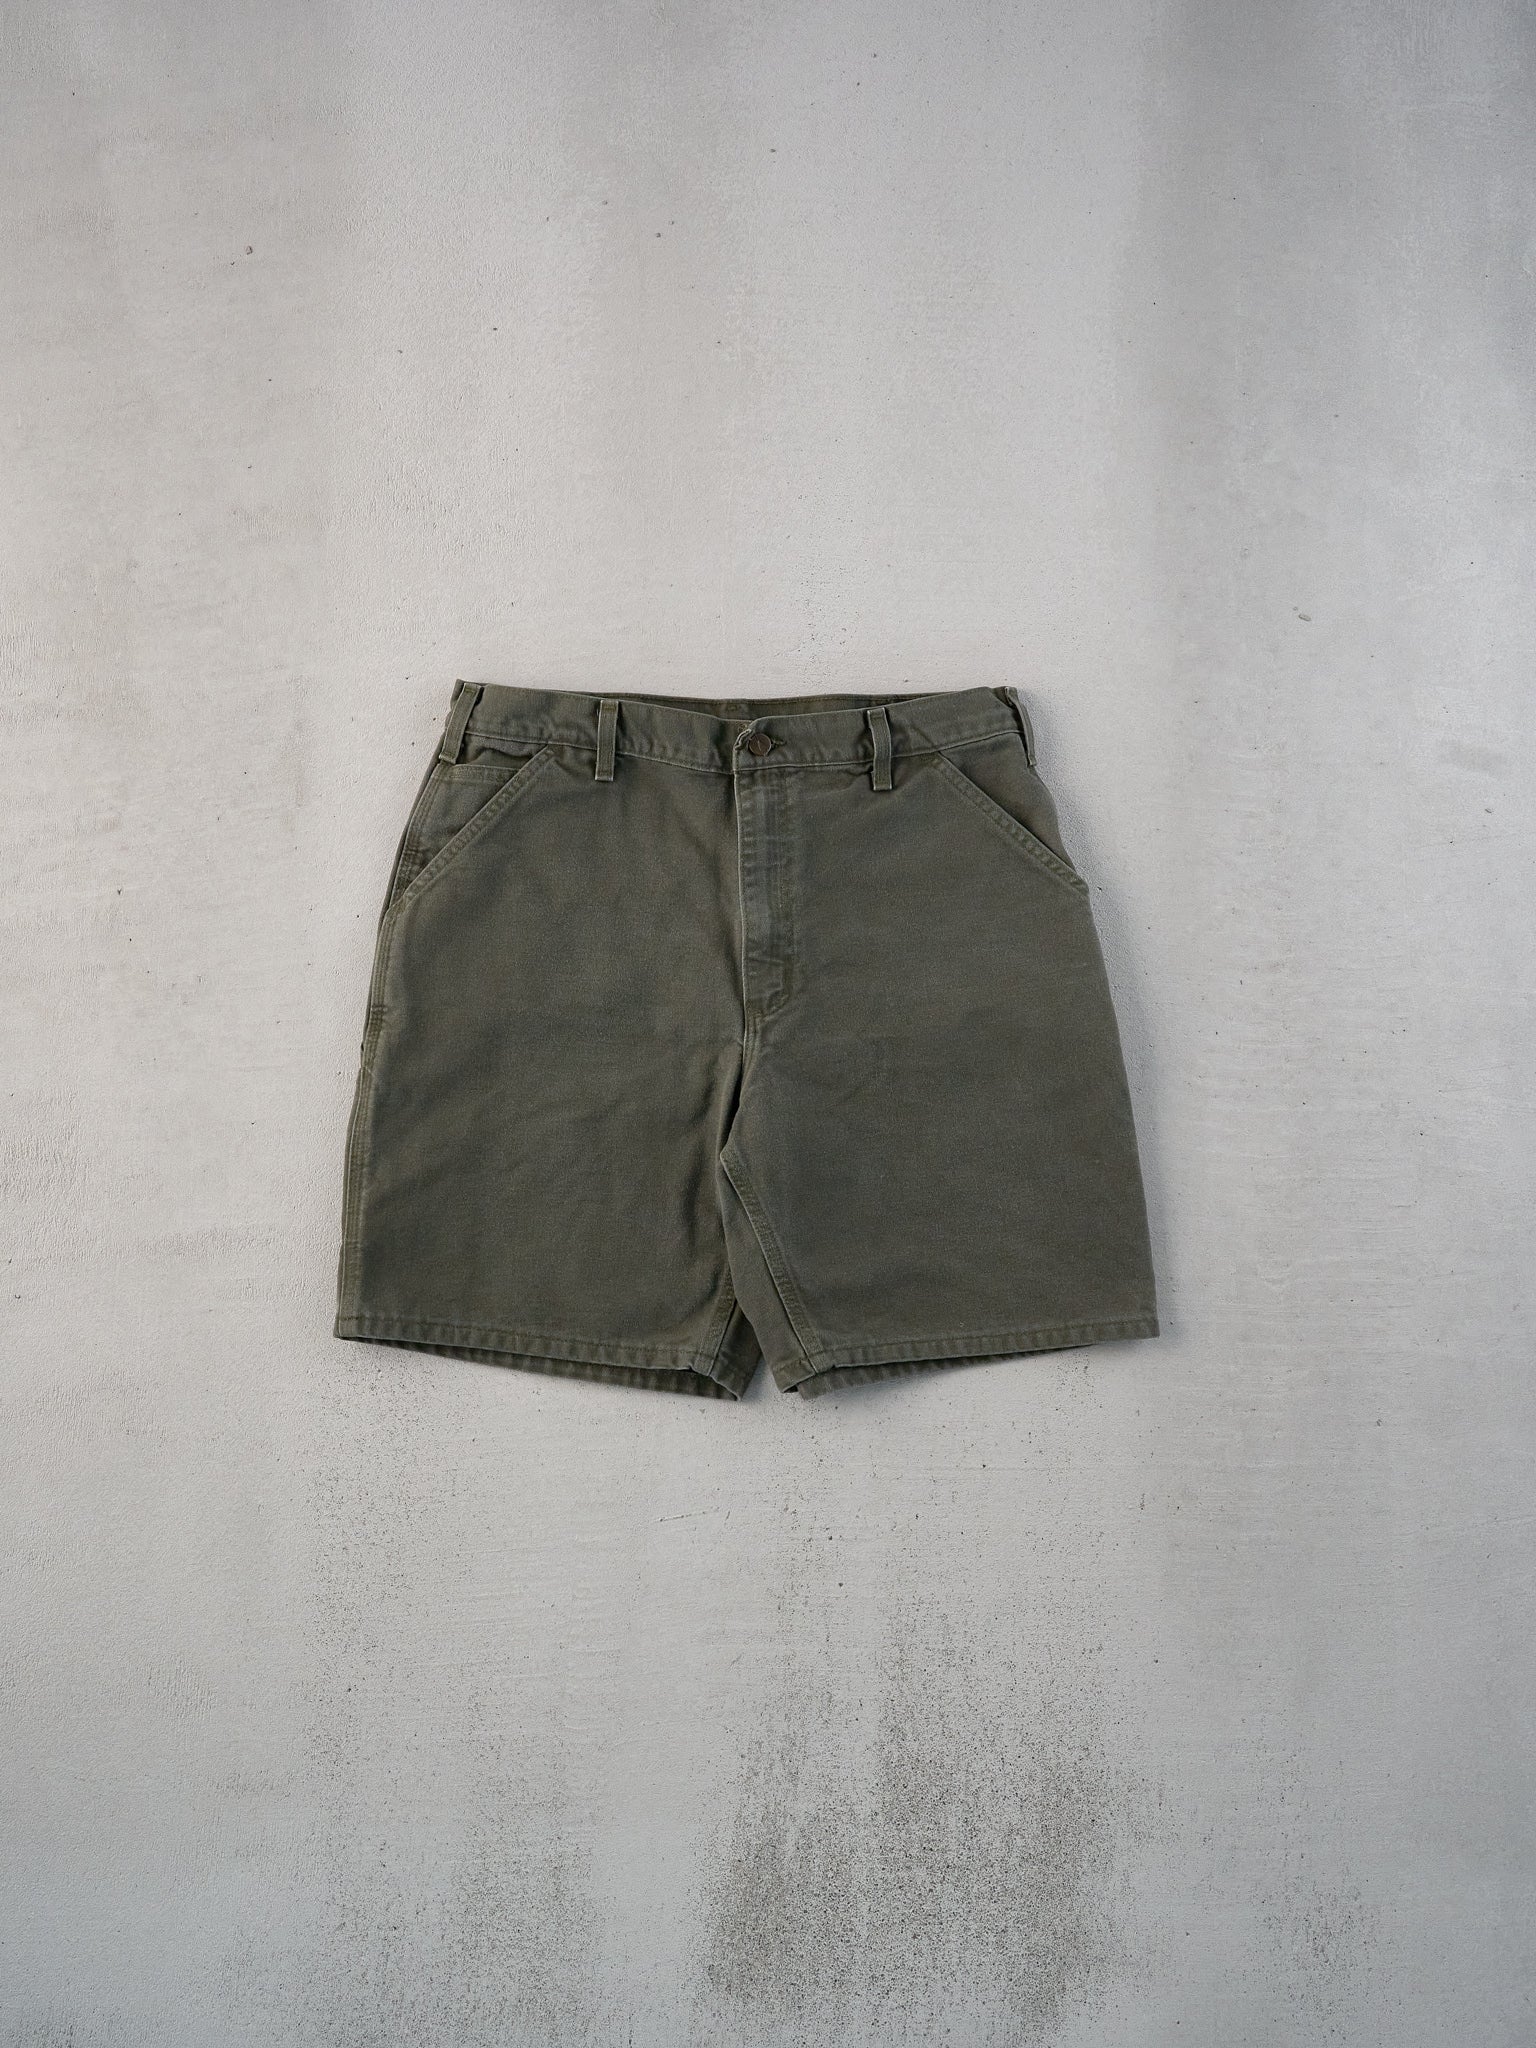 Vintage 90s Sage Green Carhartt Workwear Shorts (34x8)